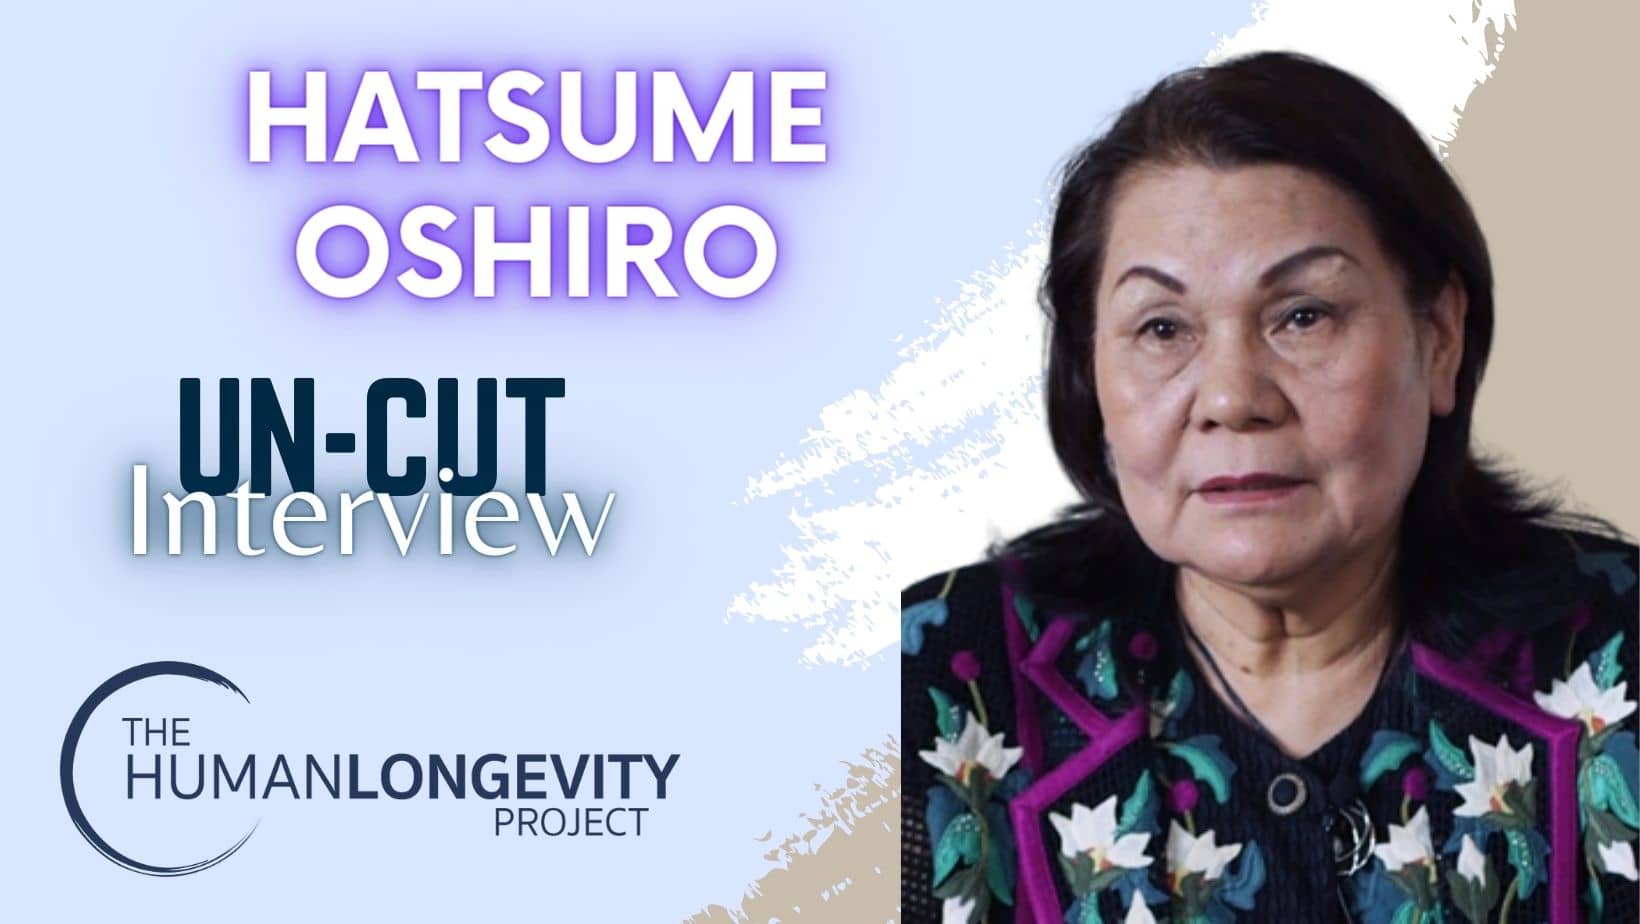 Human Longevity Project Uncut Interview With Hatsume Oshiro